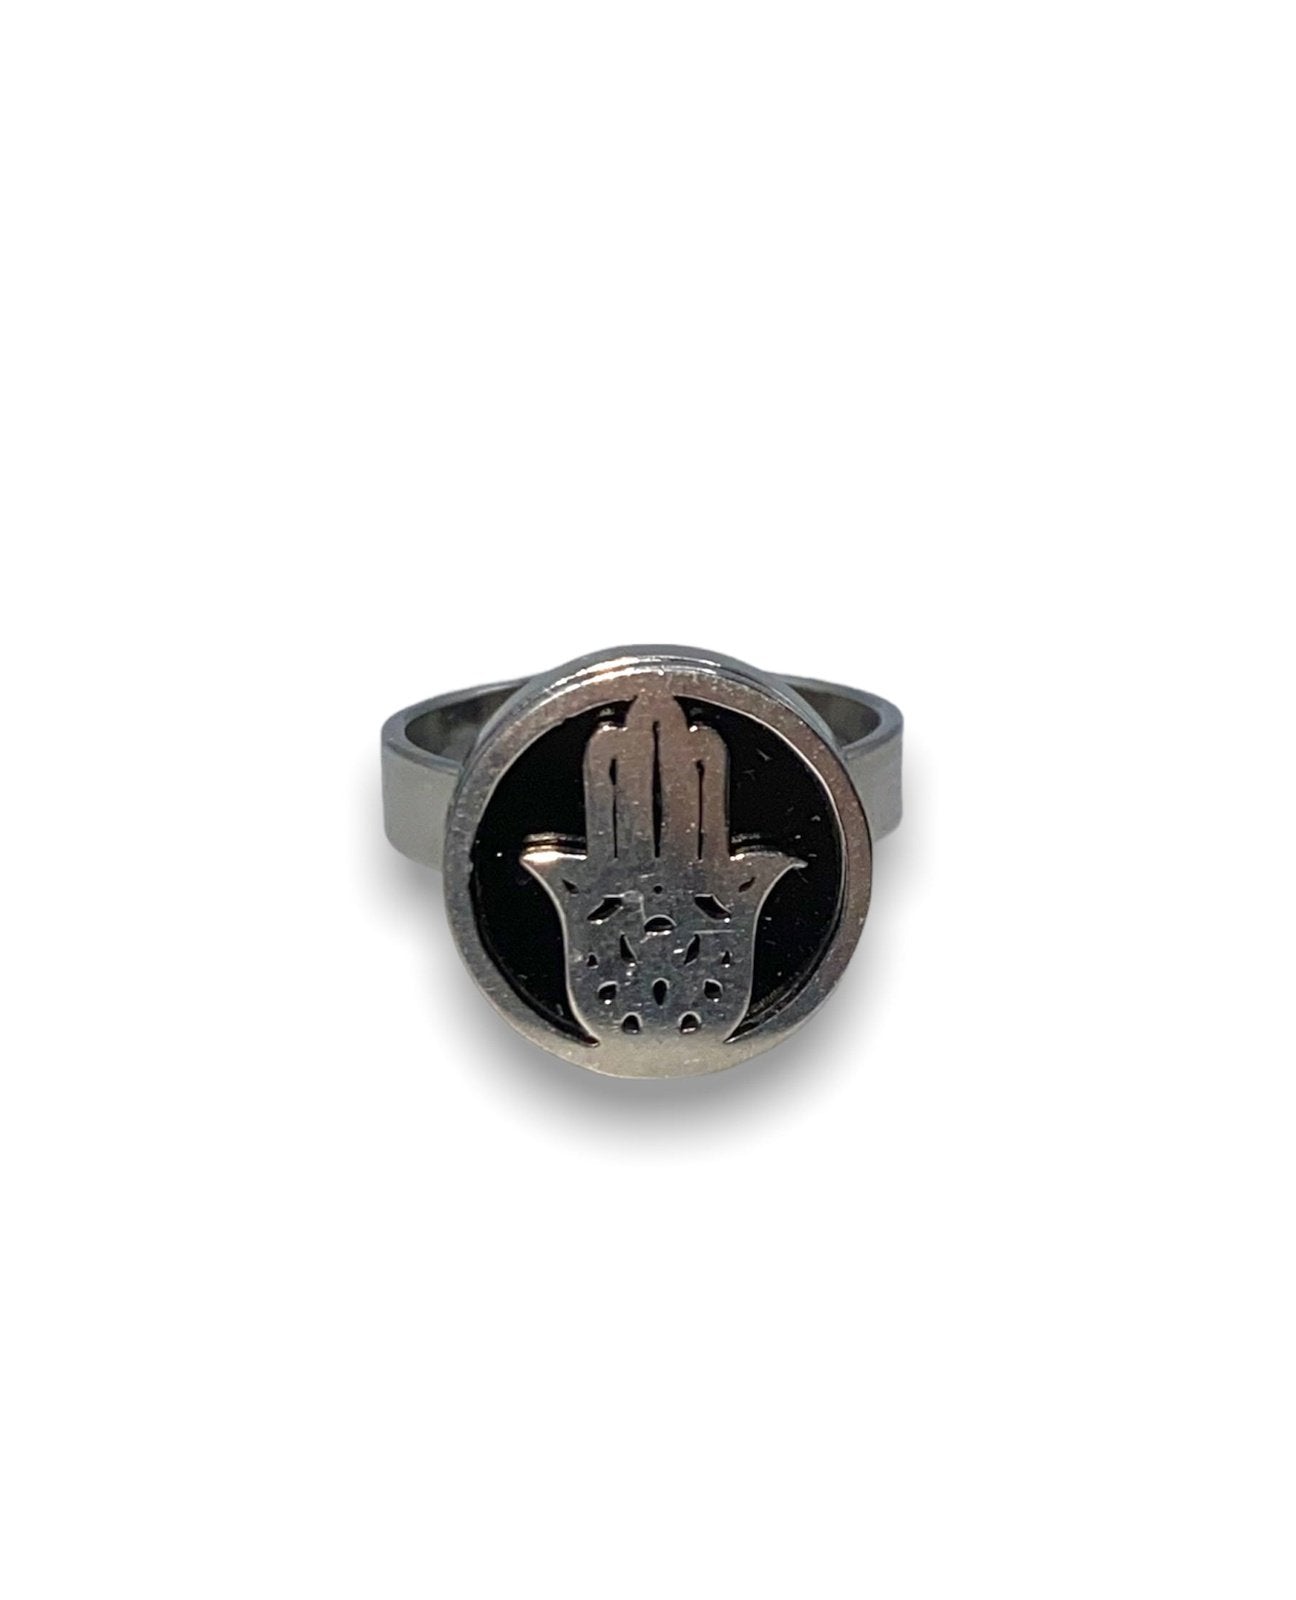 Stainless Steel Hamsa Hand Ring with Black Inner